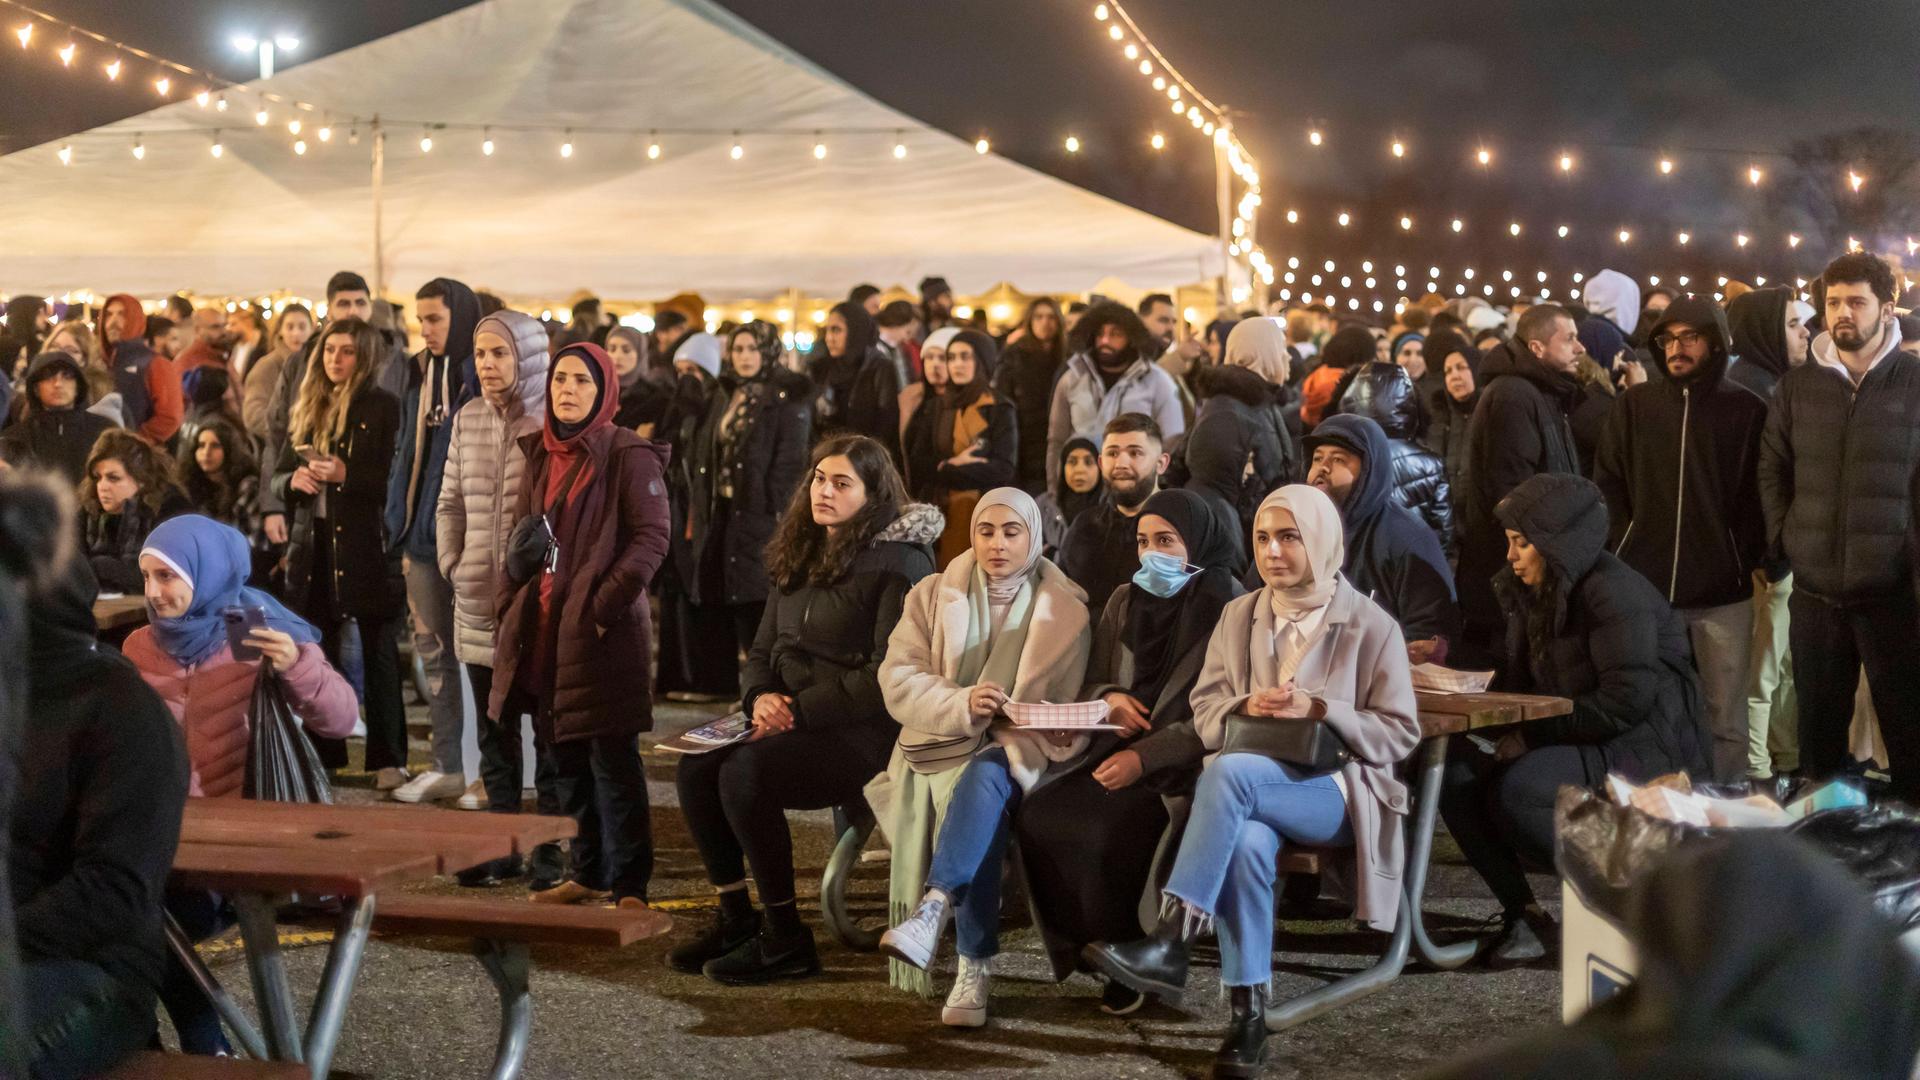  Menschen während des "Ramadan Suhoor Festival" in Dearborn, Michigan, USA.